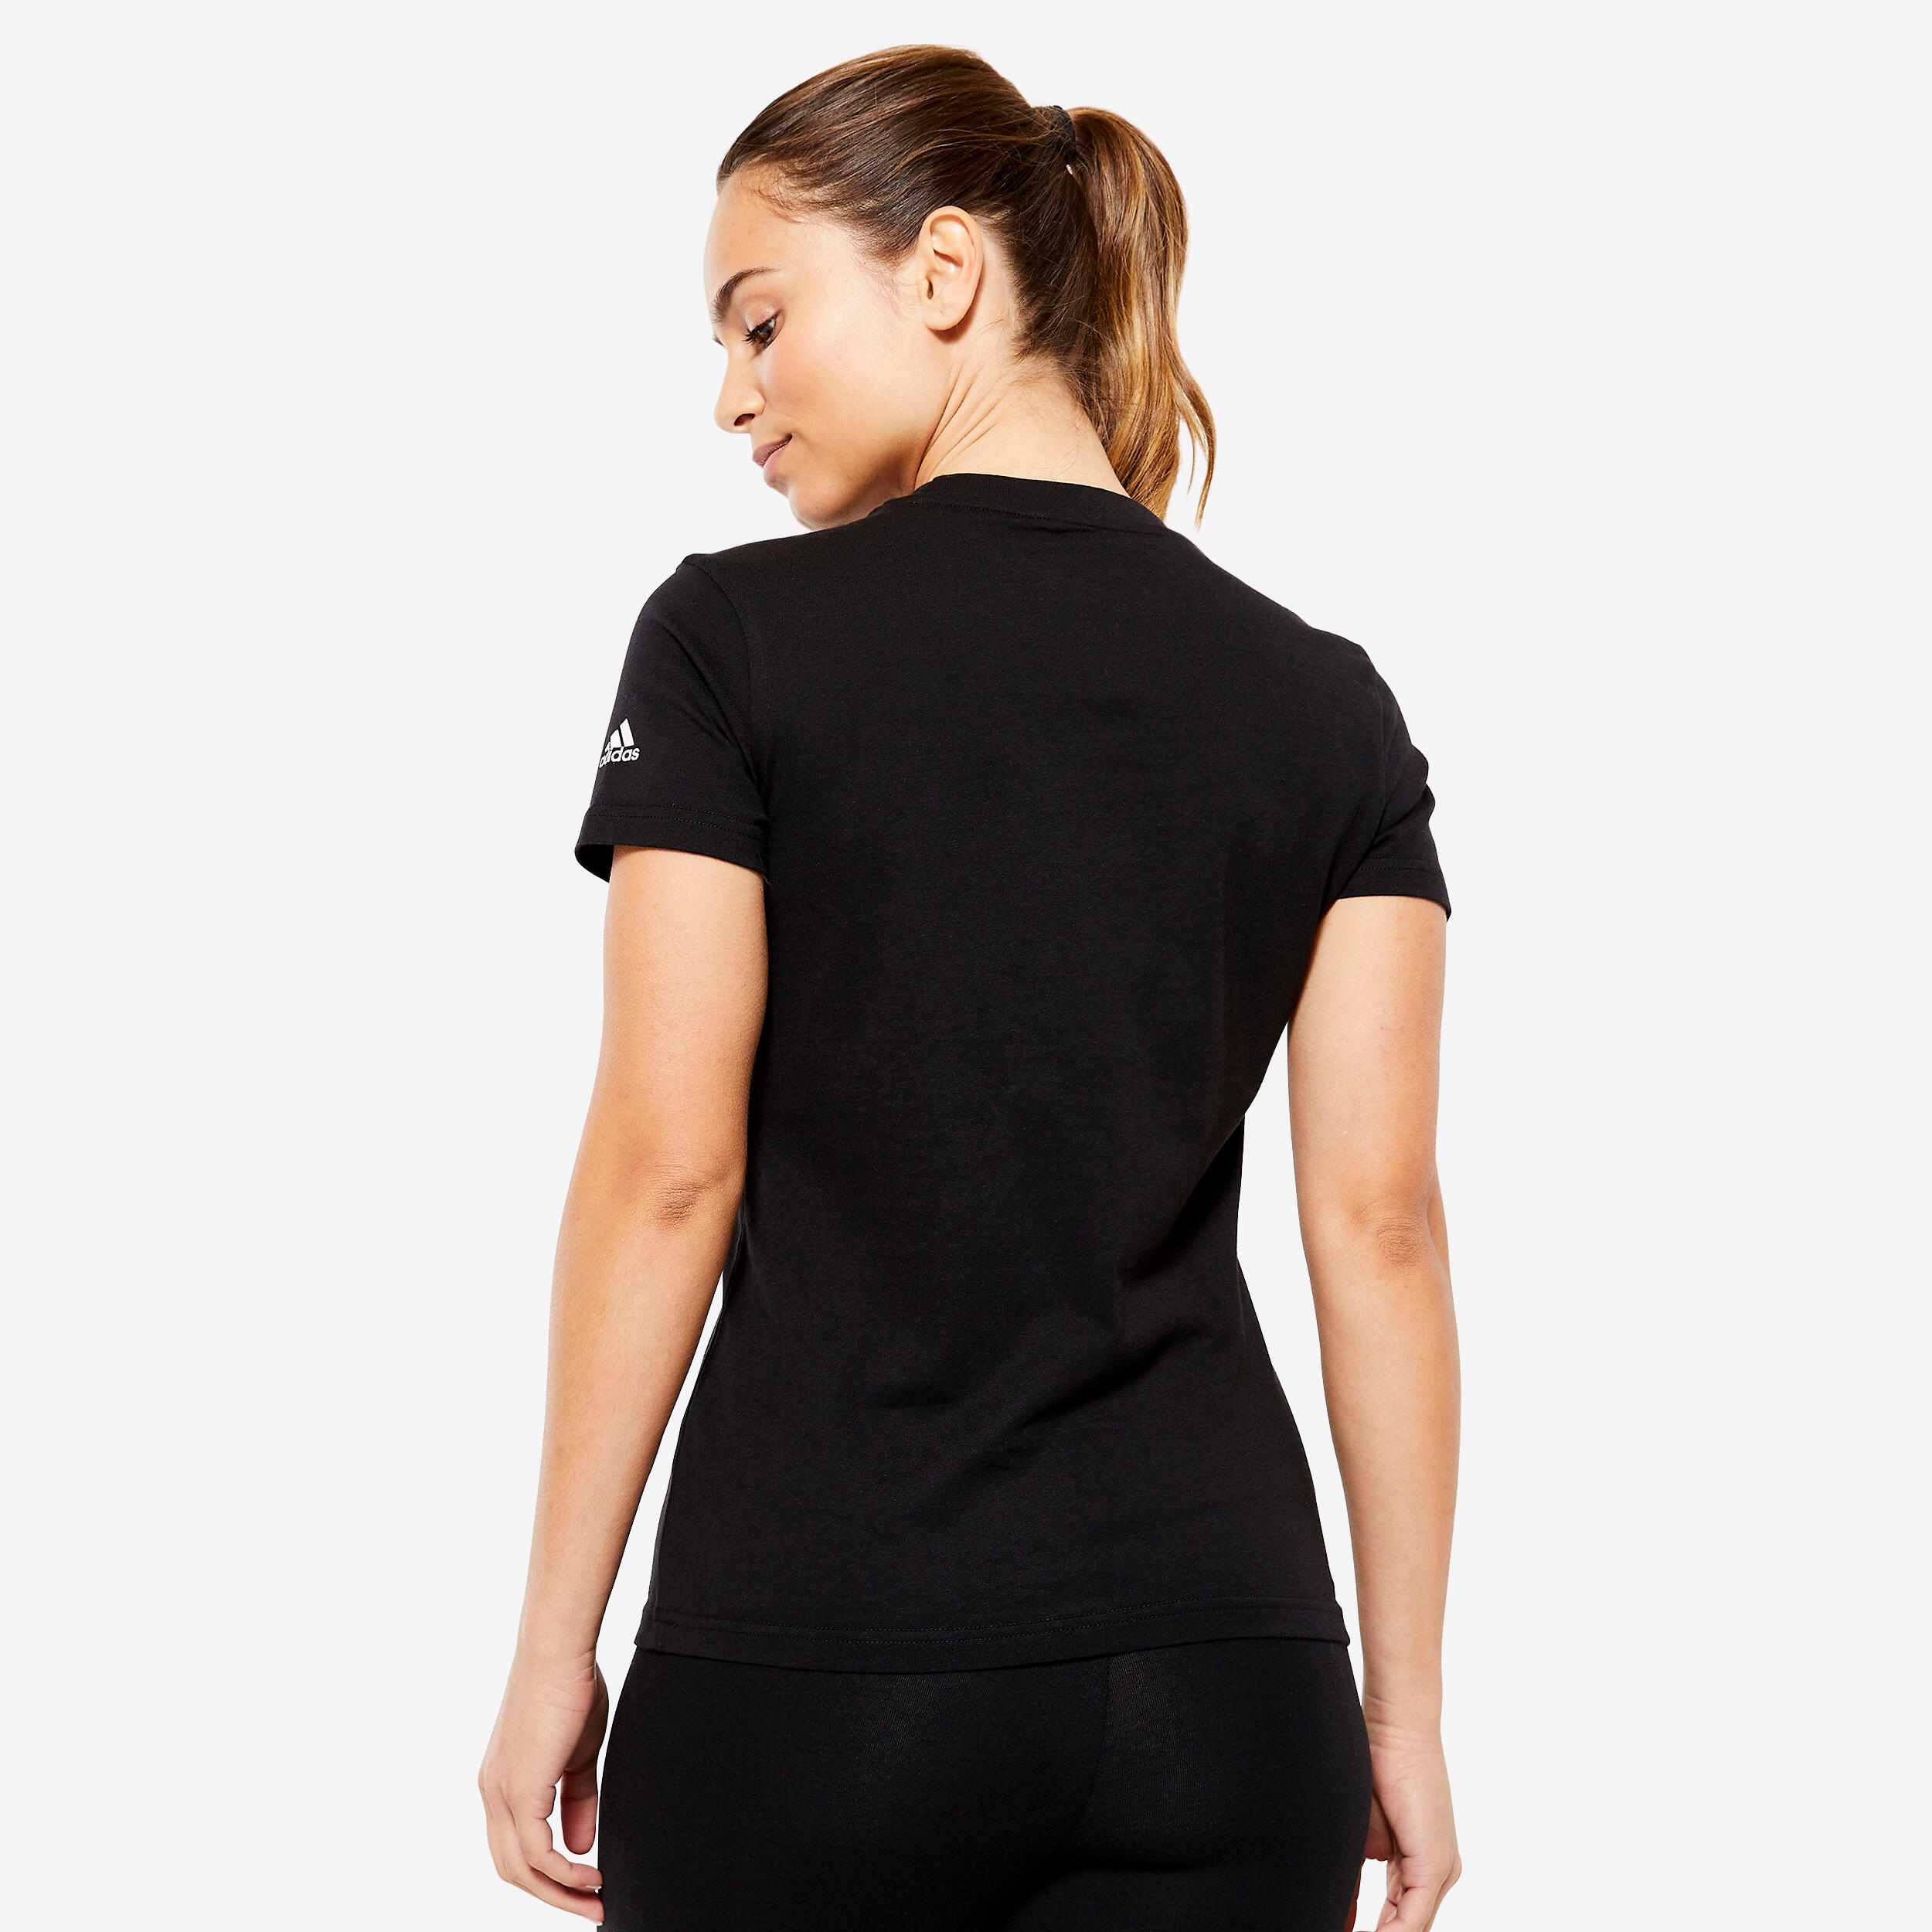 Women's Low-Impact Fitness T-Shirt - Black 5/6